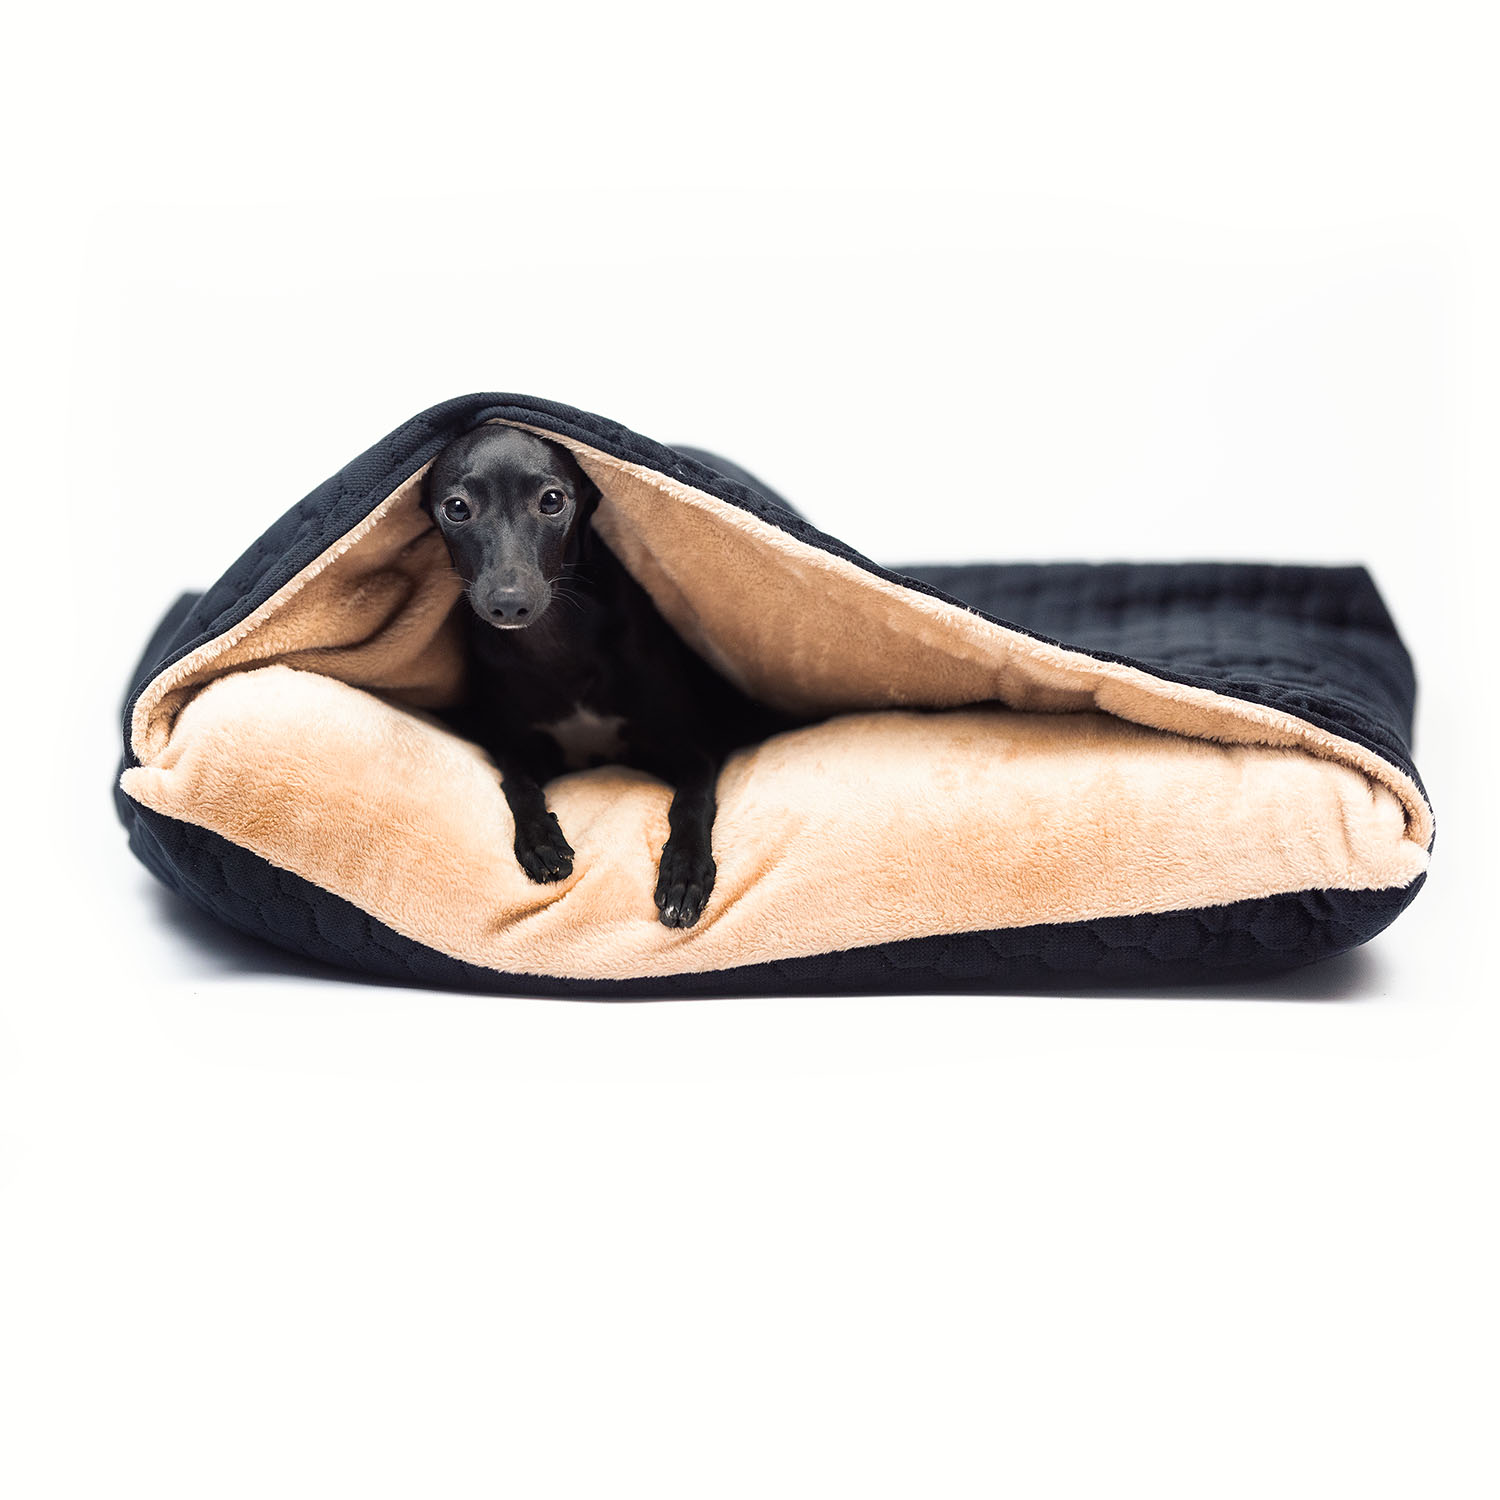 Iitalian greyhound bed Black Caramel Soft - Sangue Azzurro image 1